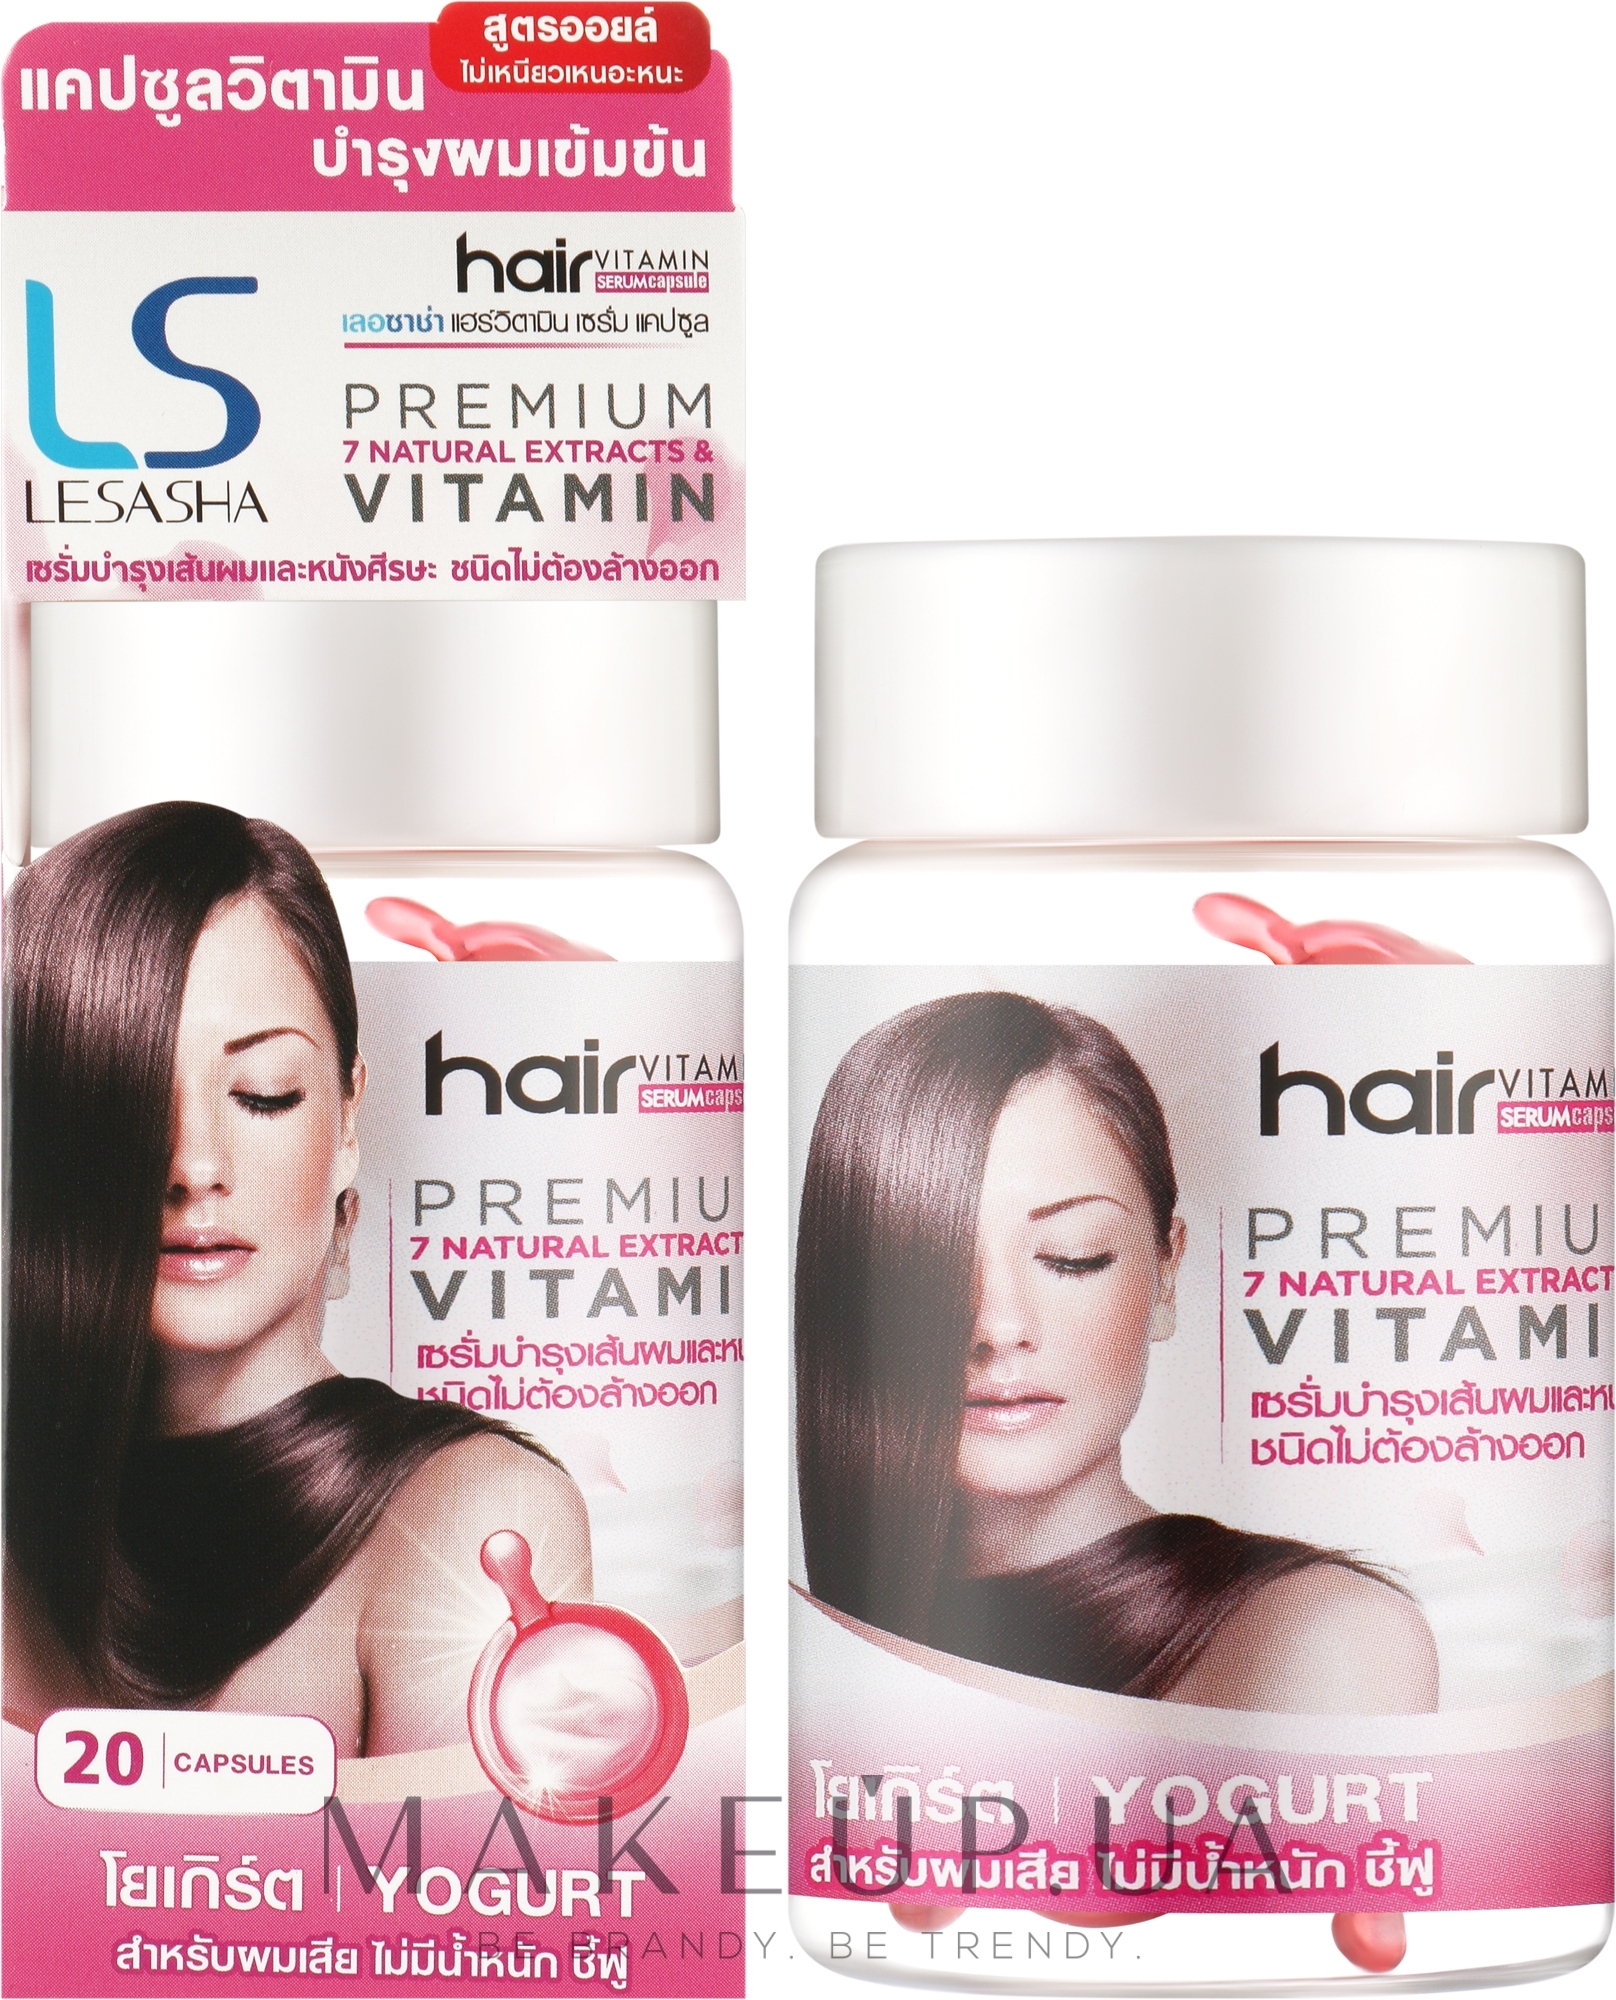 Тайские капсулы для волос c йогуртом - Lesasha Hair Serum Vitamin Yogurt (флакон) — фото 20шт